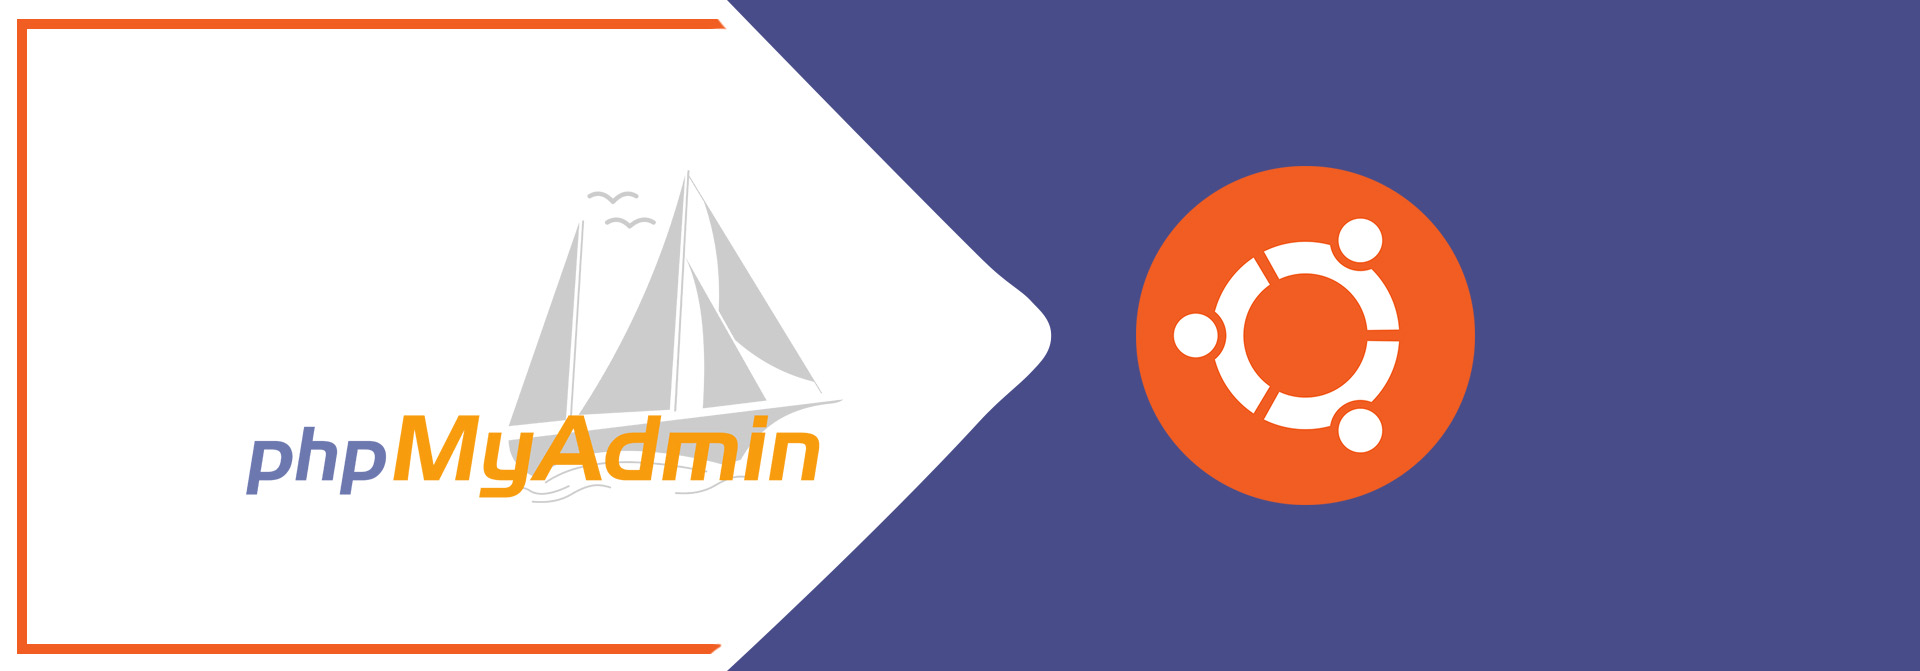 tutorials24x7 install phpmyadmin on ubuntu 20 04 lts banner DirectAdmin PhpMyAdmin Otomatik Giriş Kurulumu